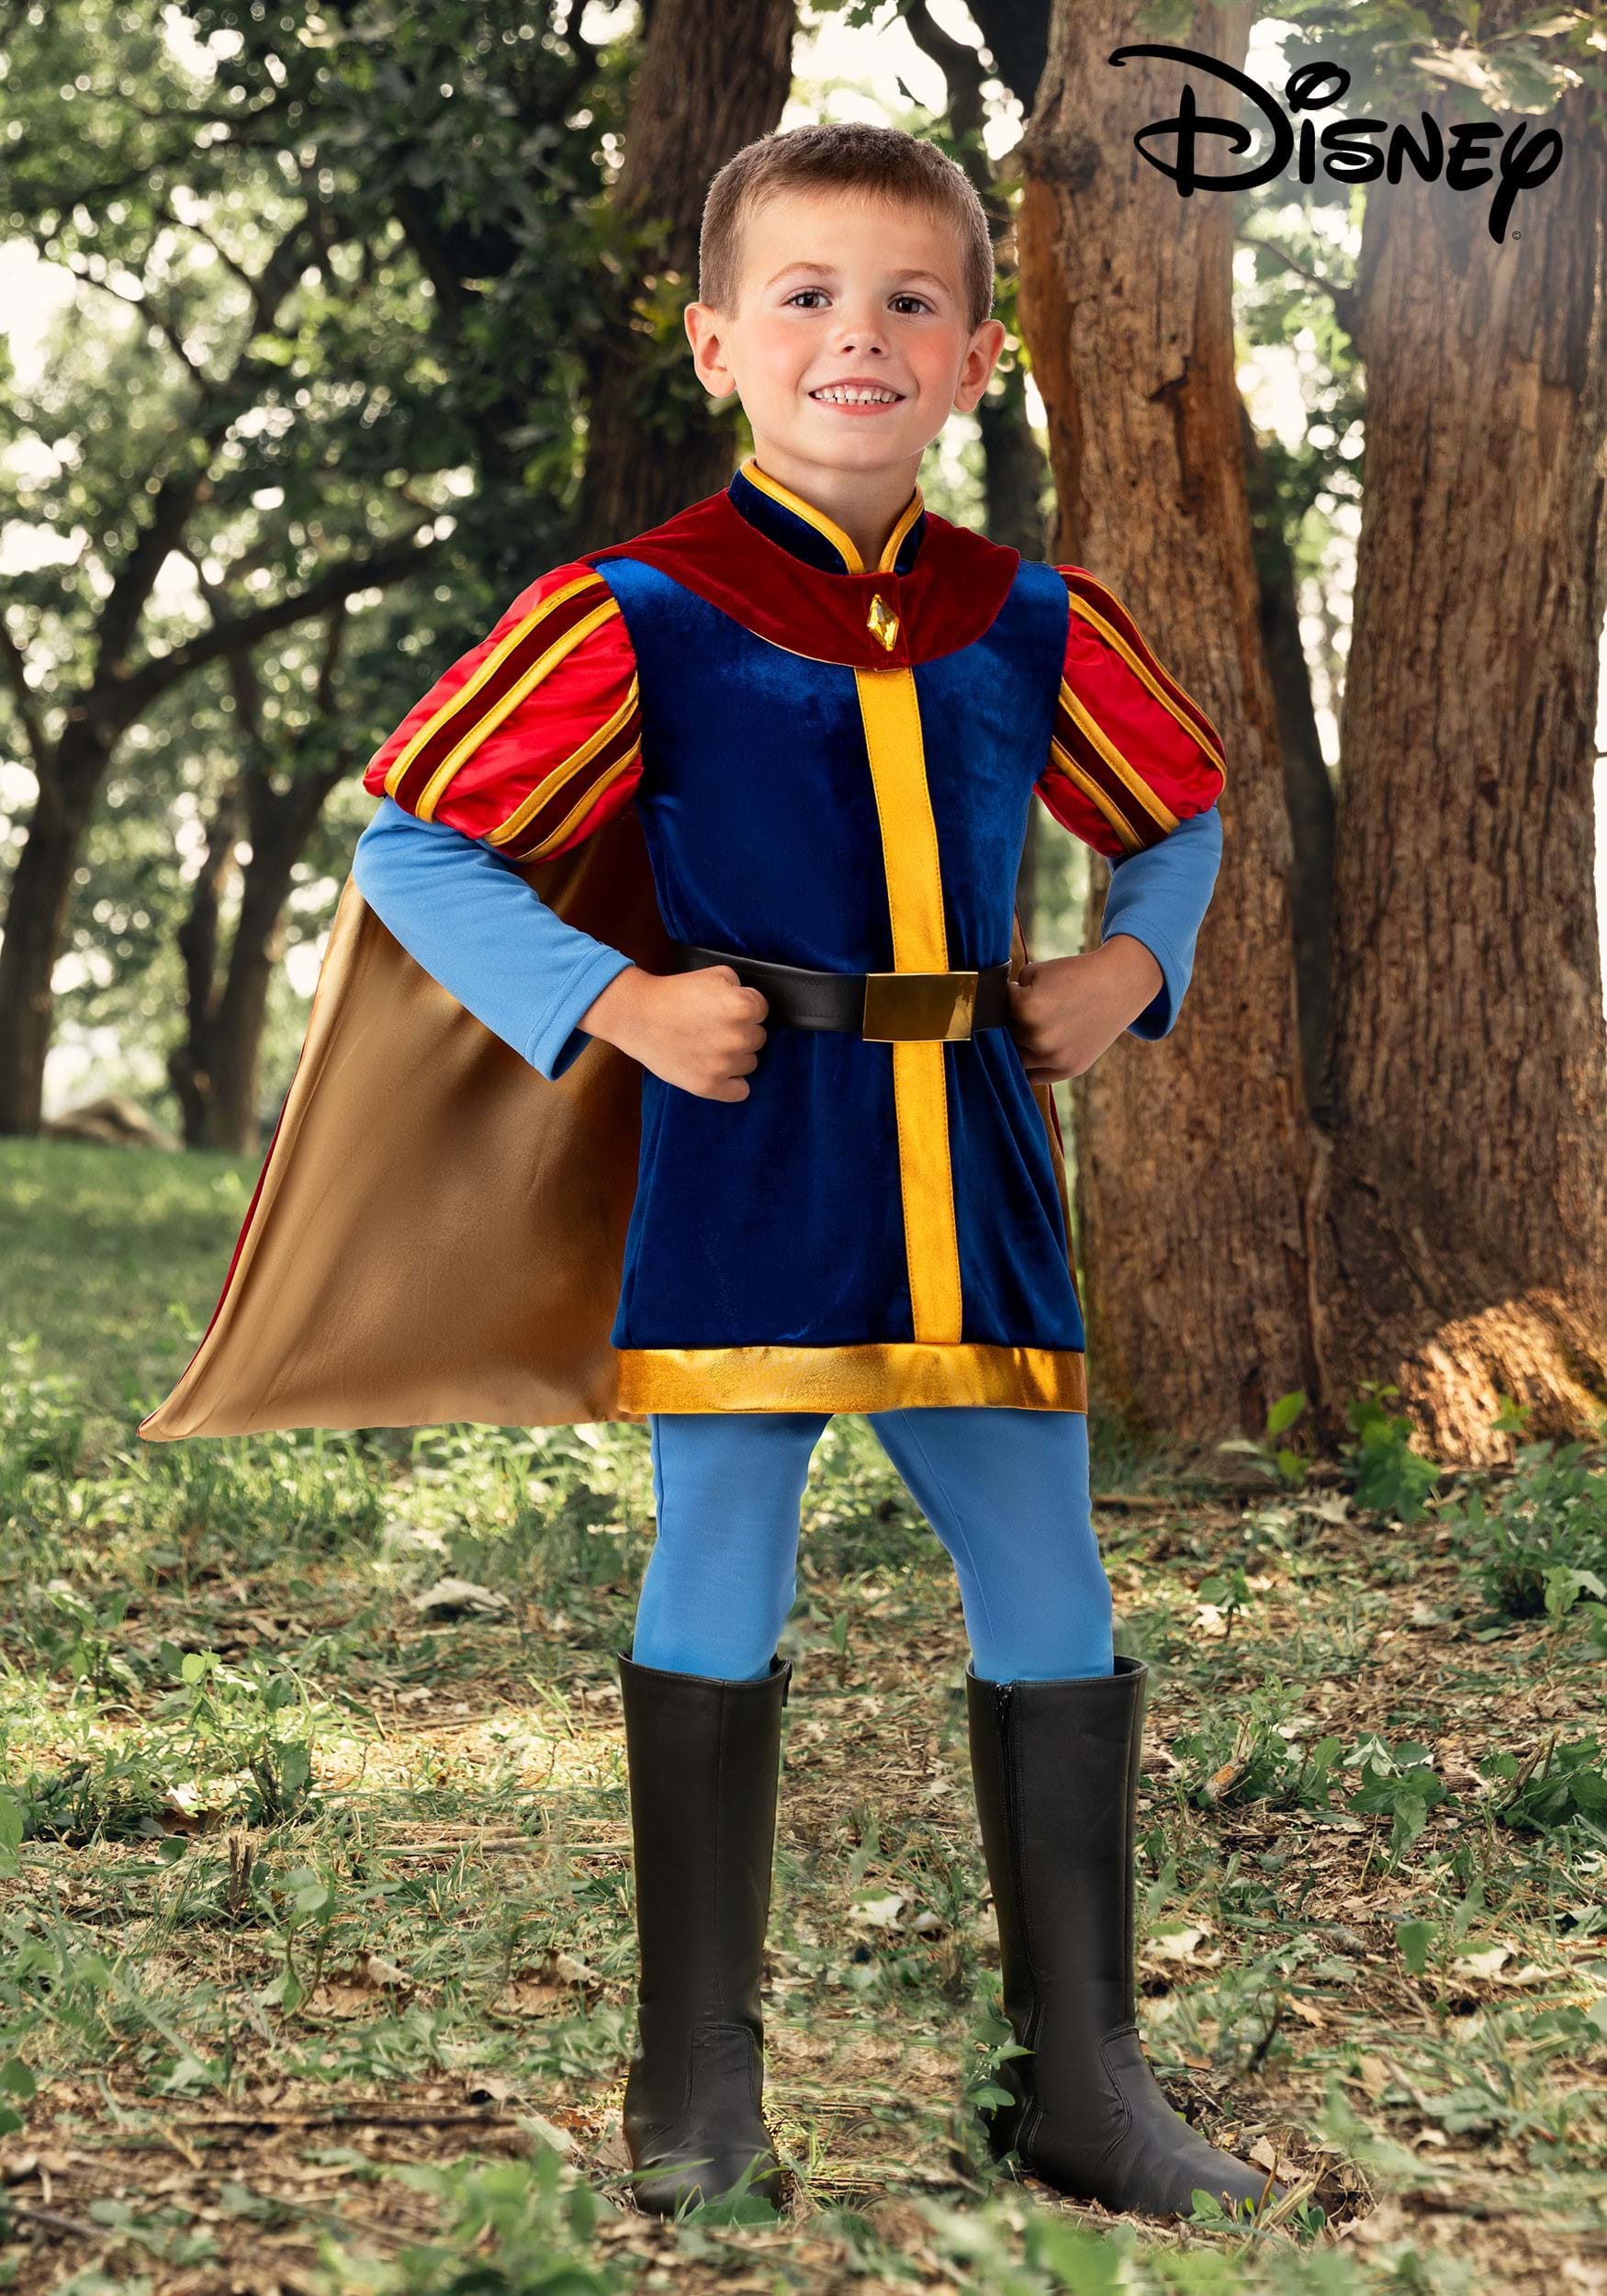 Toddler Disney Sleeping Beauty Prince Phillip Costume for Boys